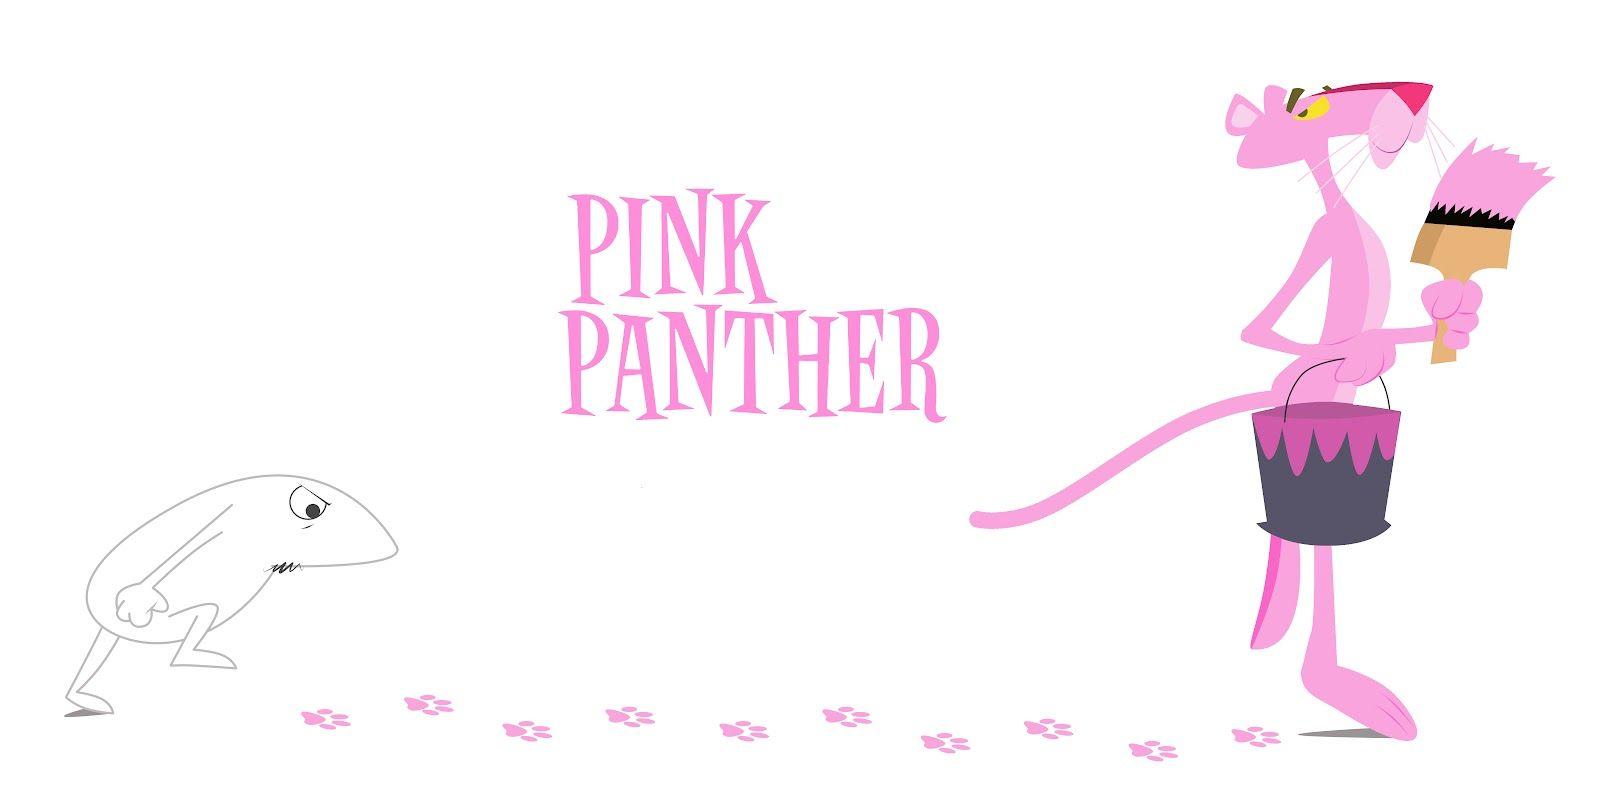 pink panther cartoon wallpaper images